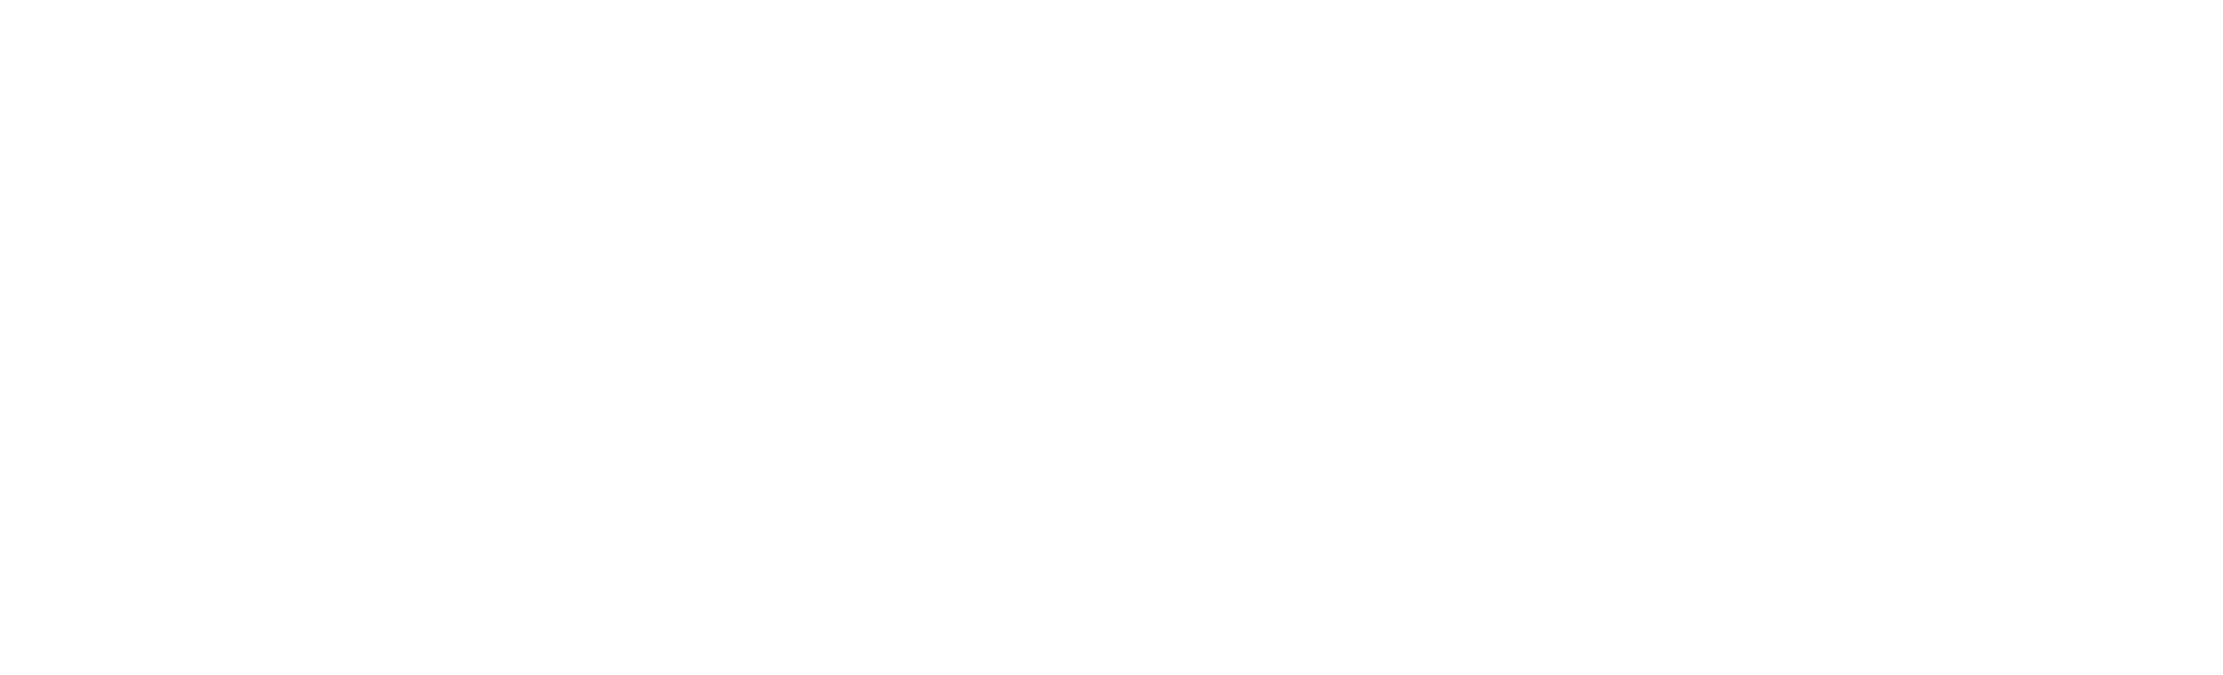 Matrix Specialty Lubricants